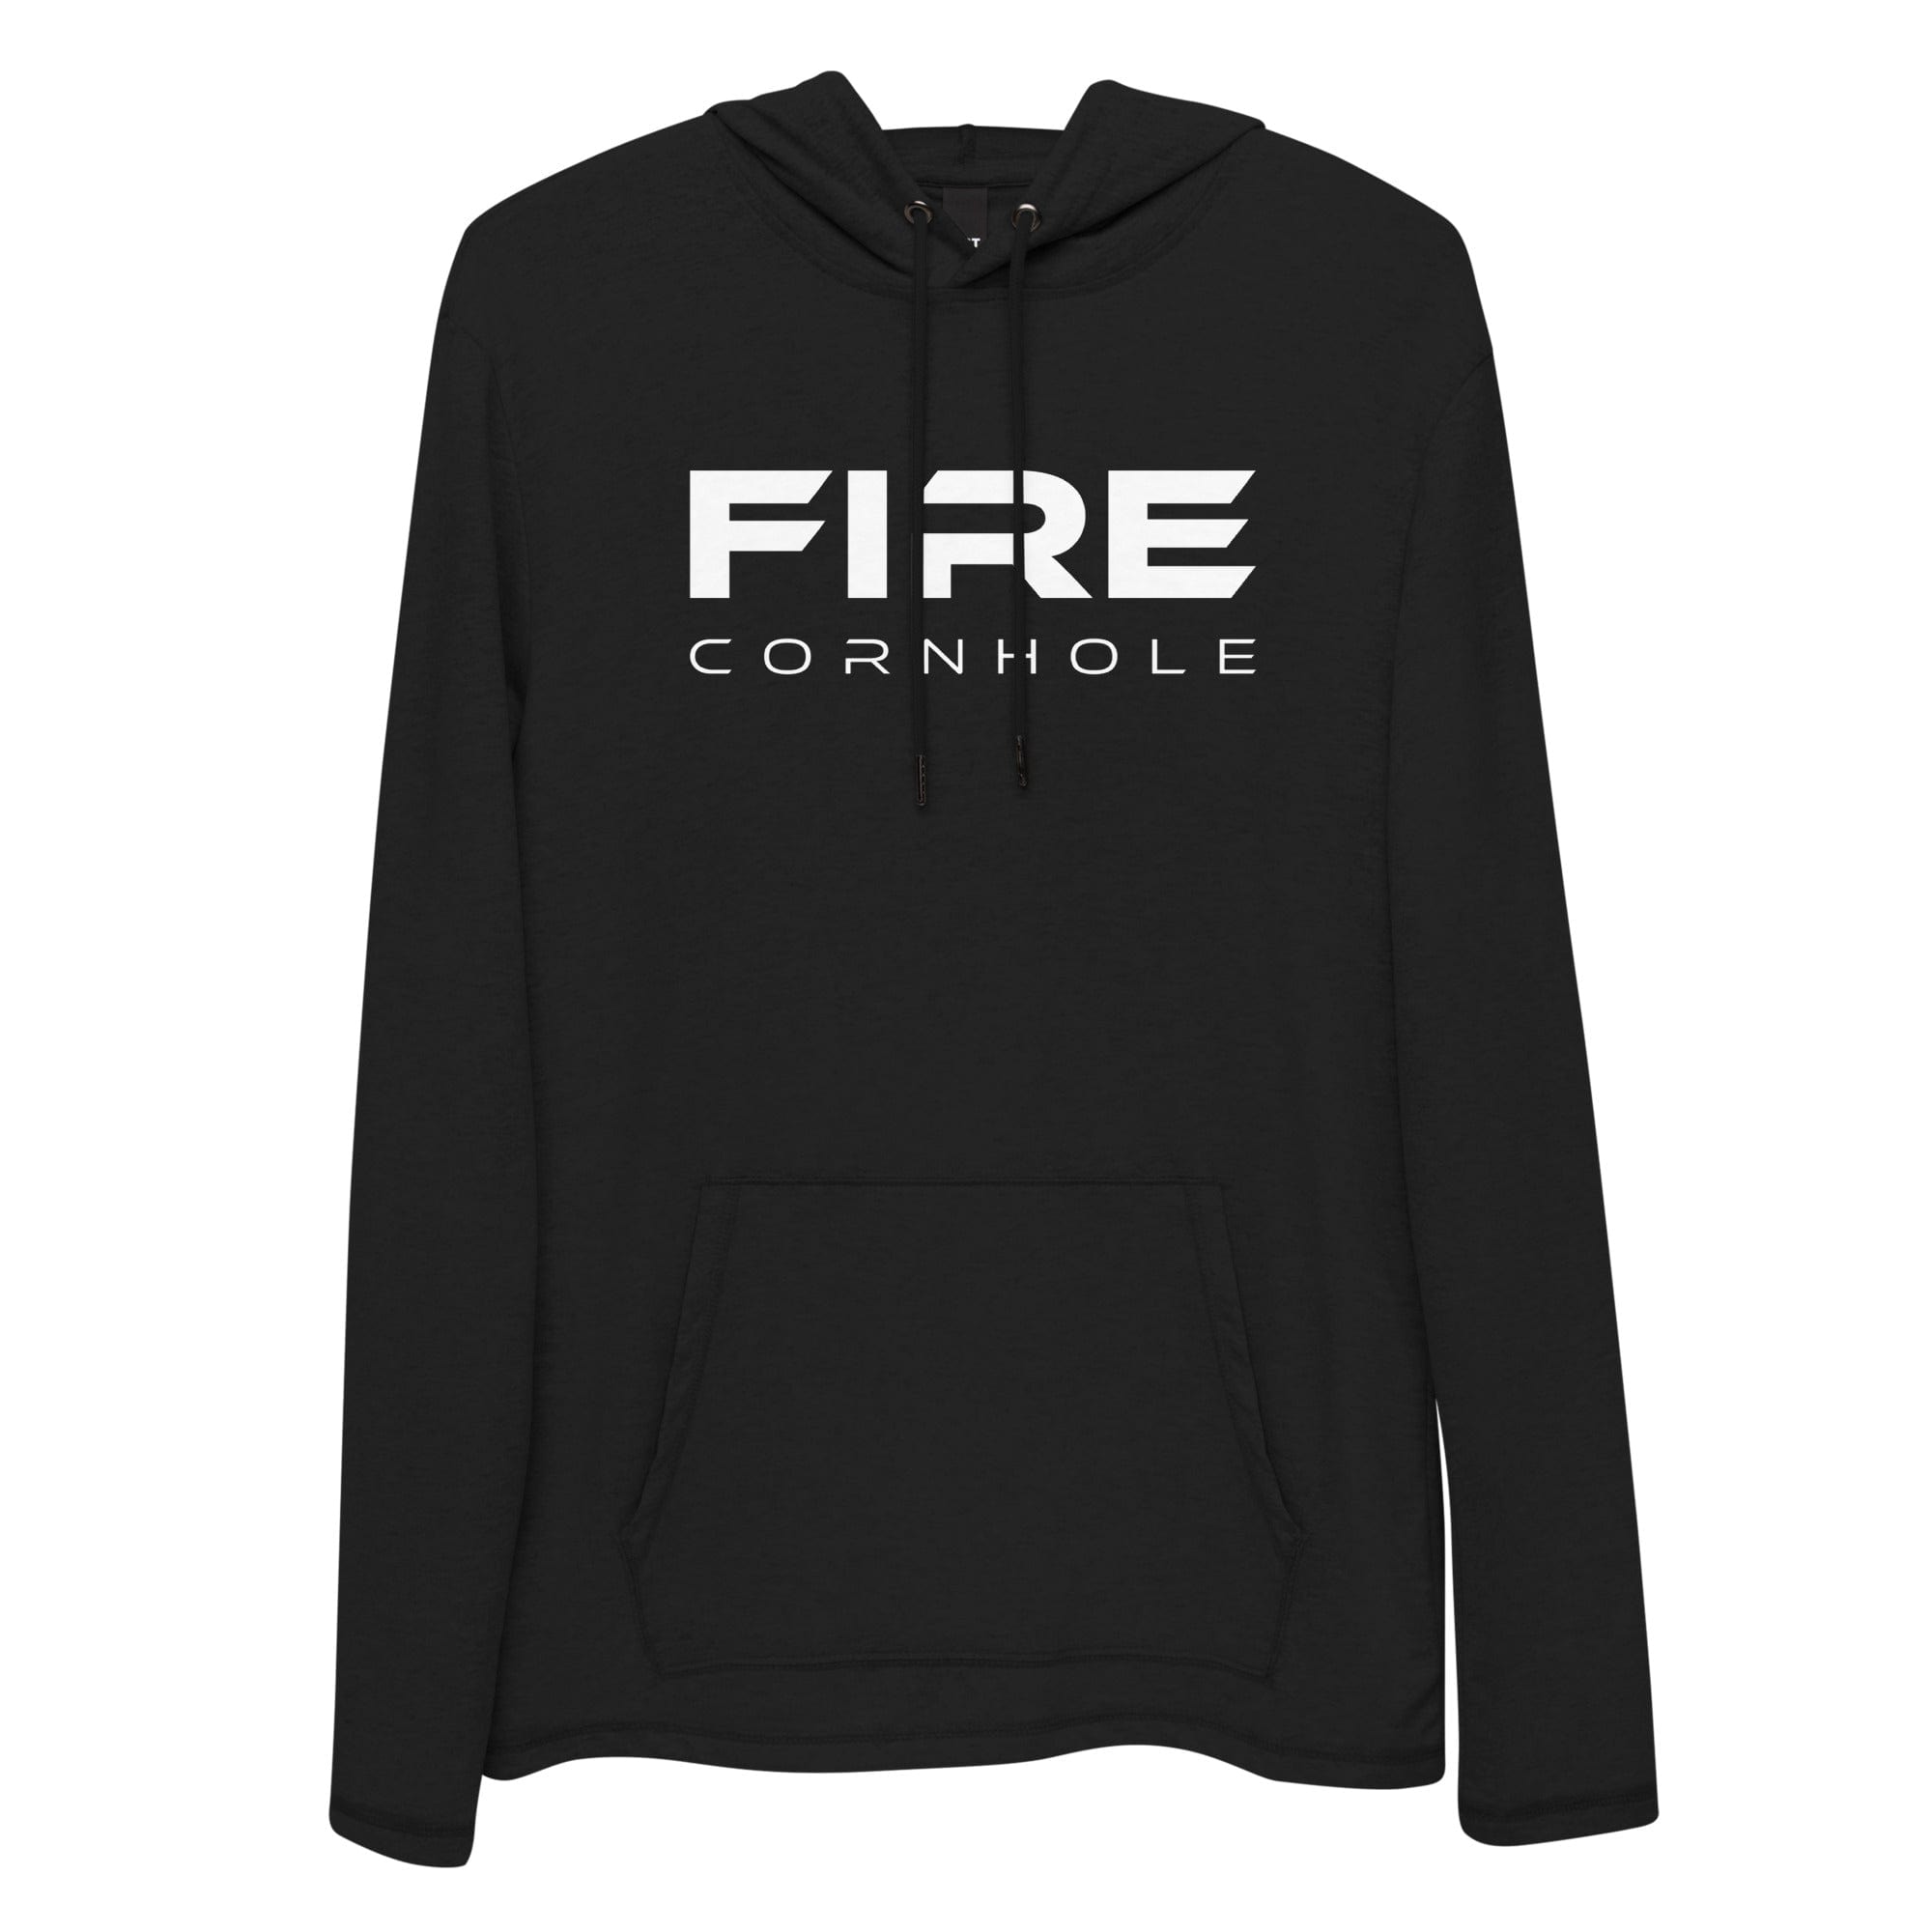 Black hooded longsleeve with Fire Cornhole logo